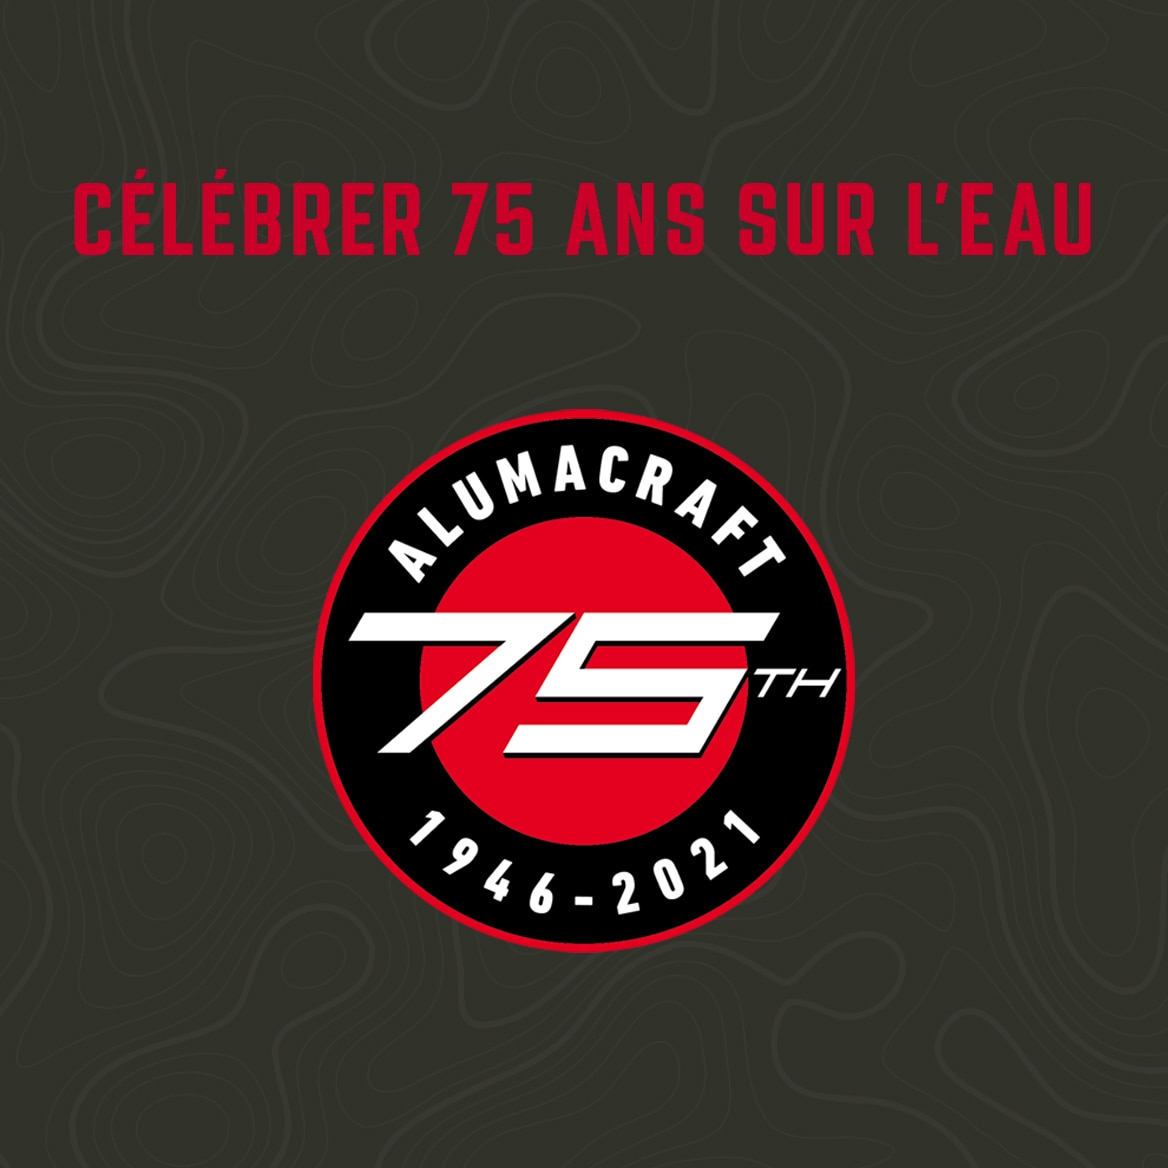 Alumacraft 75th anniversary logo 